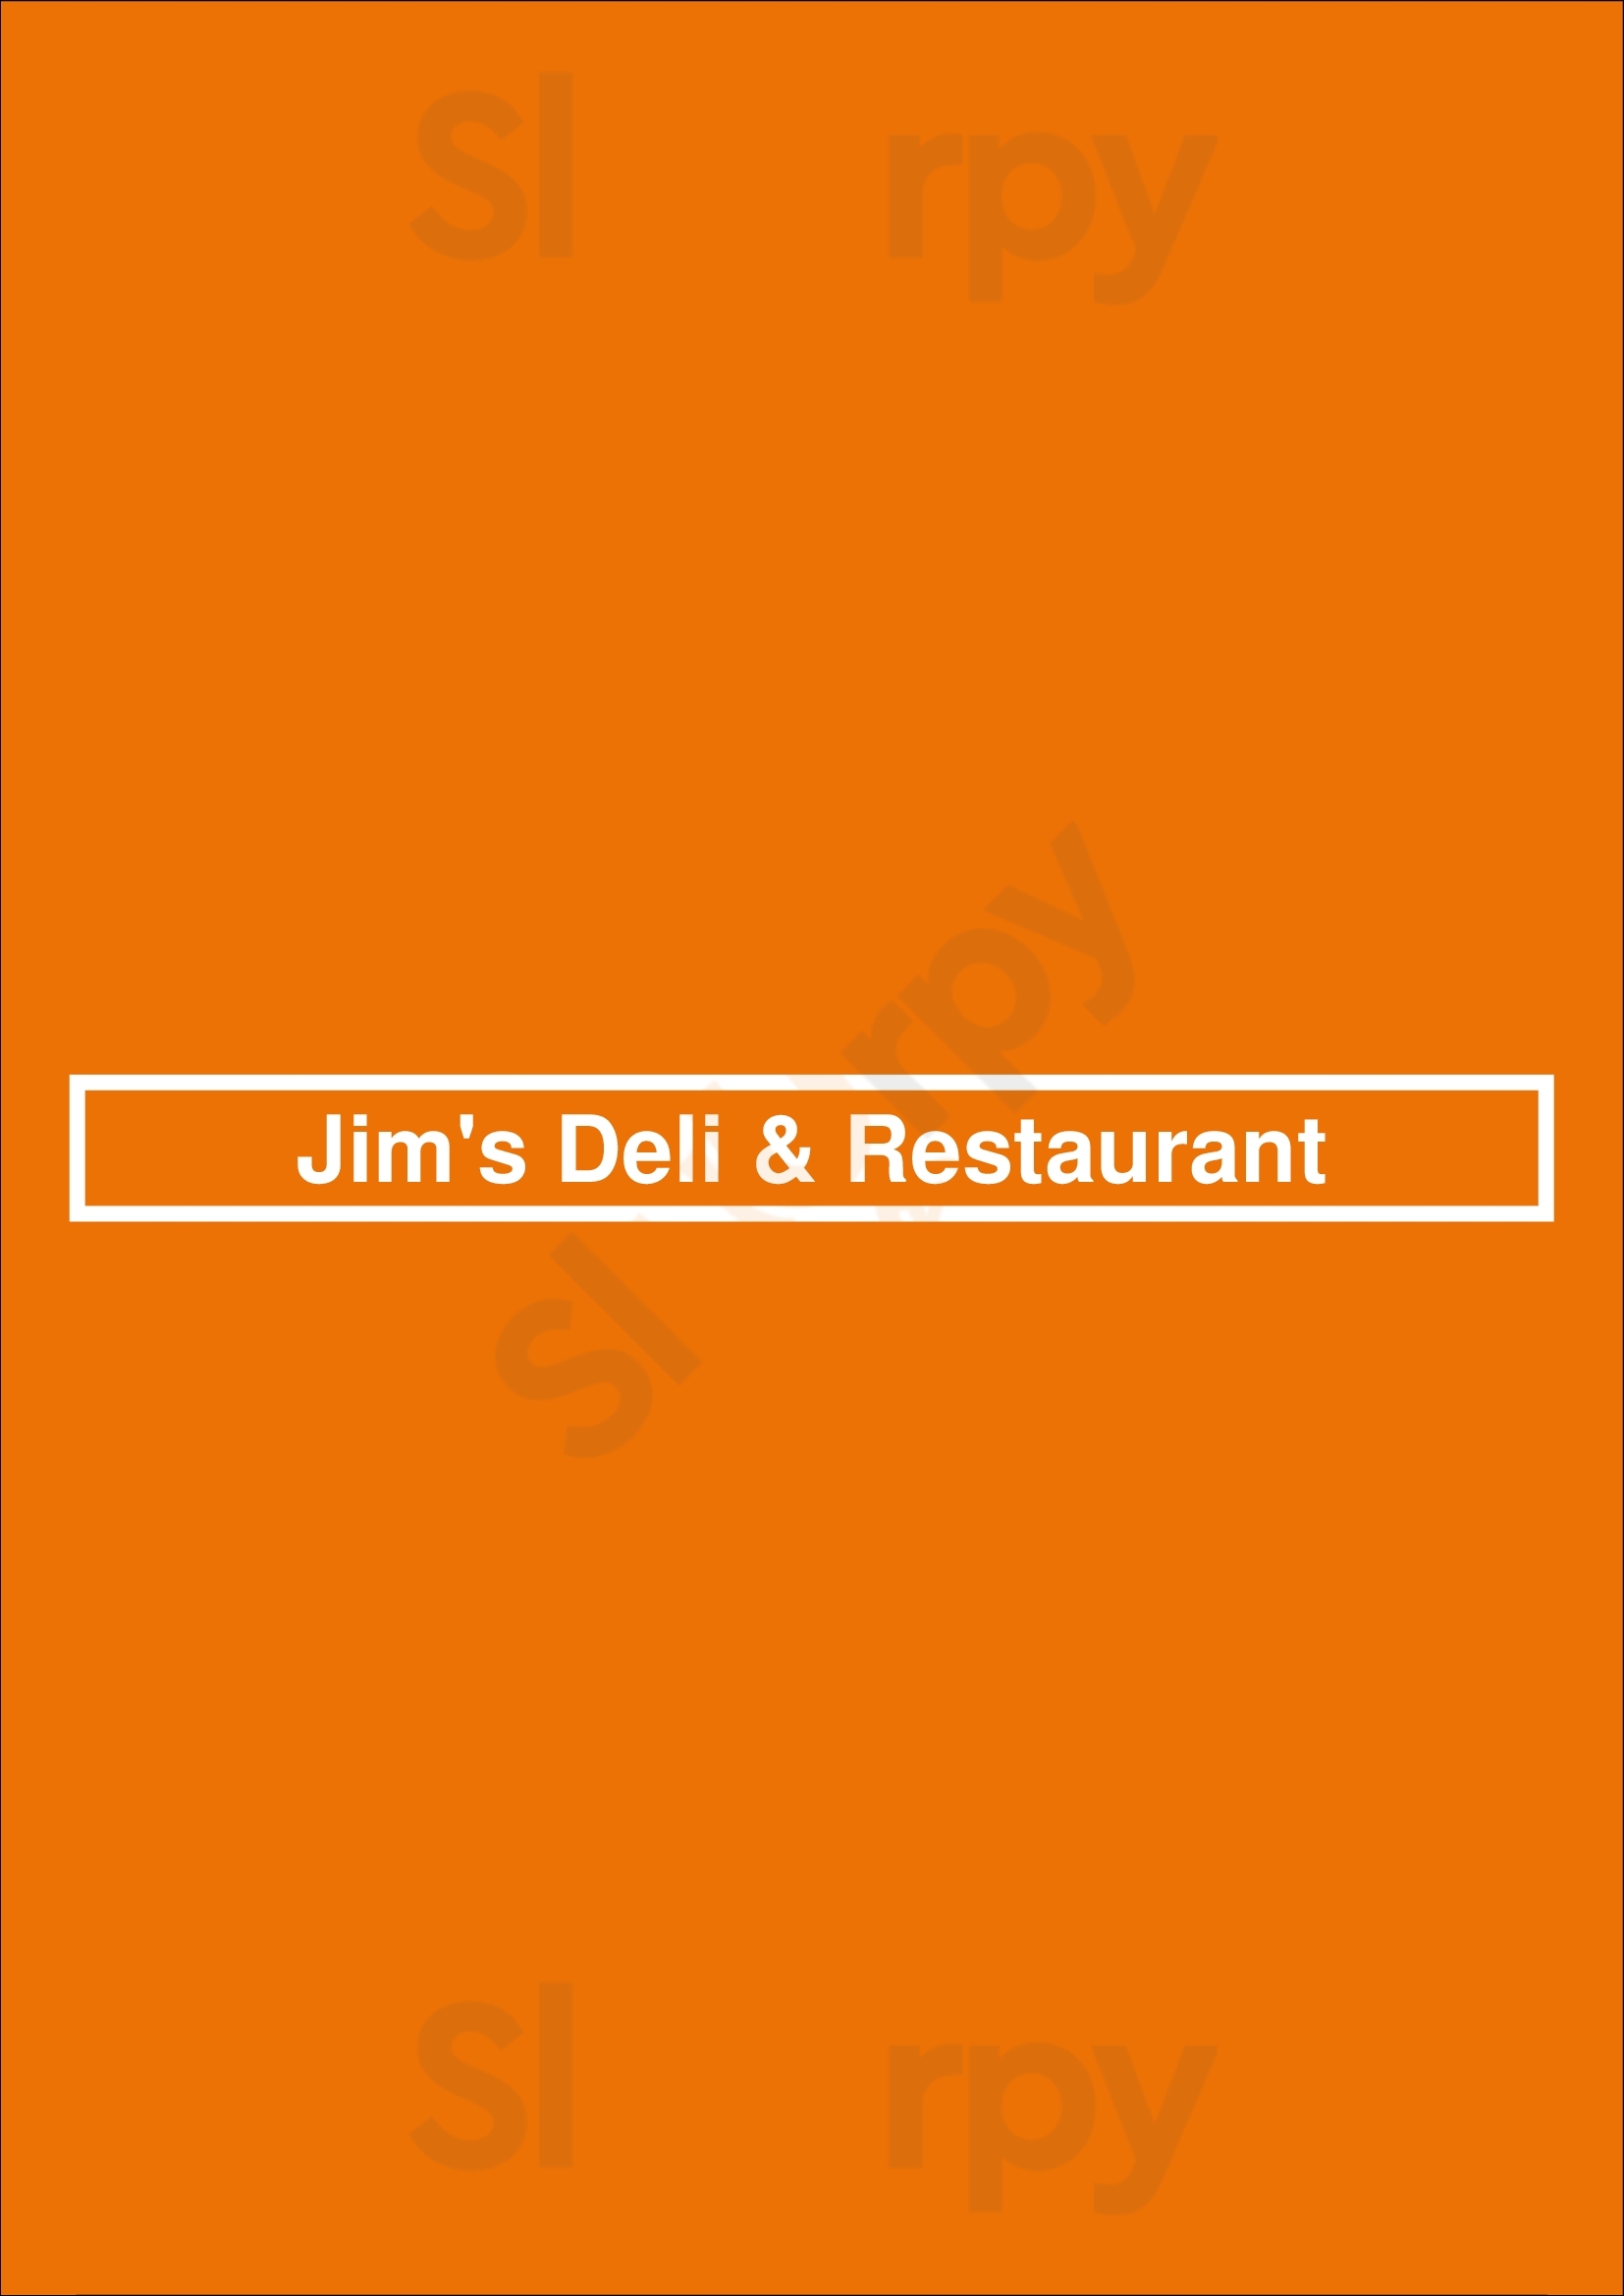 Jim's Deli & Restaurant Boston Menu - 1